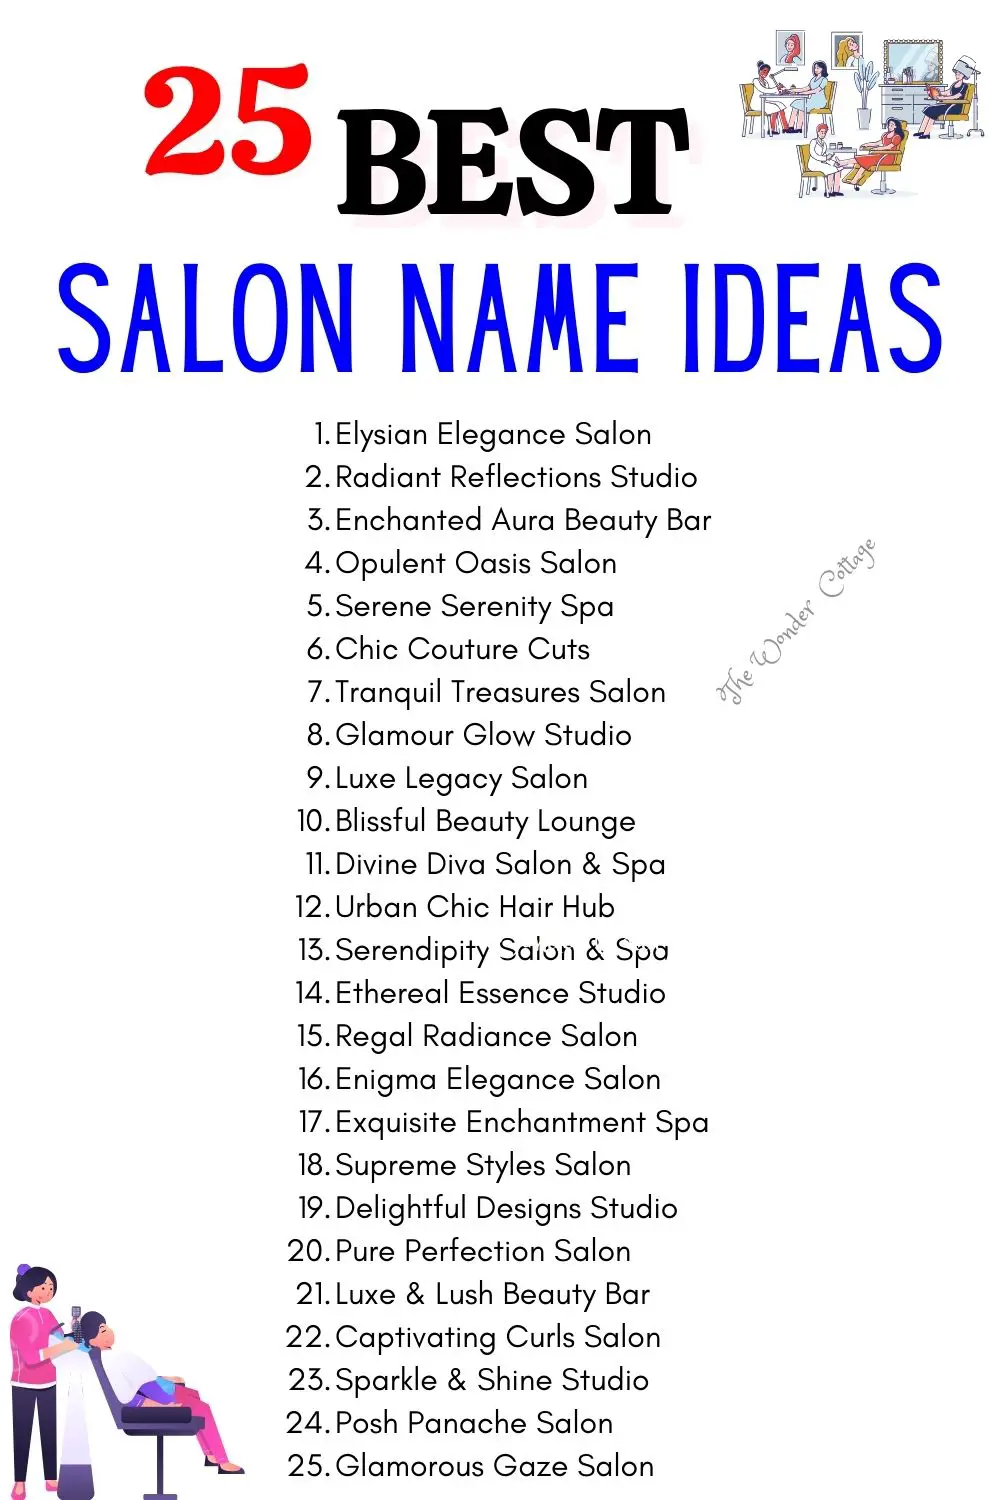 Best Salon Name Ideas